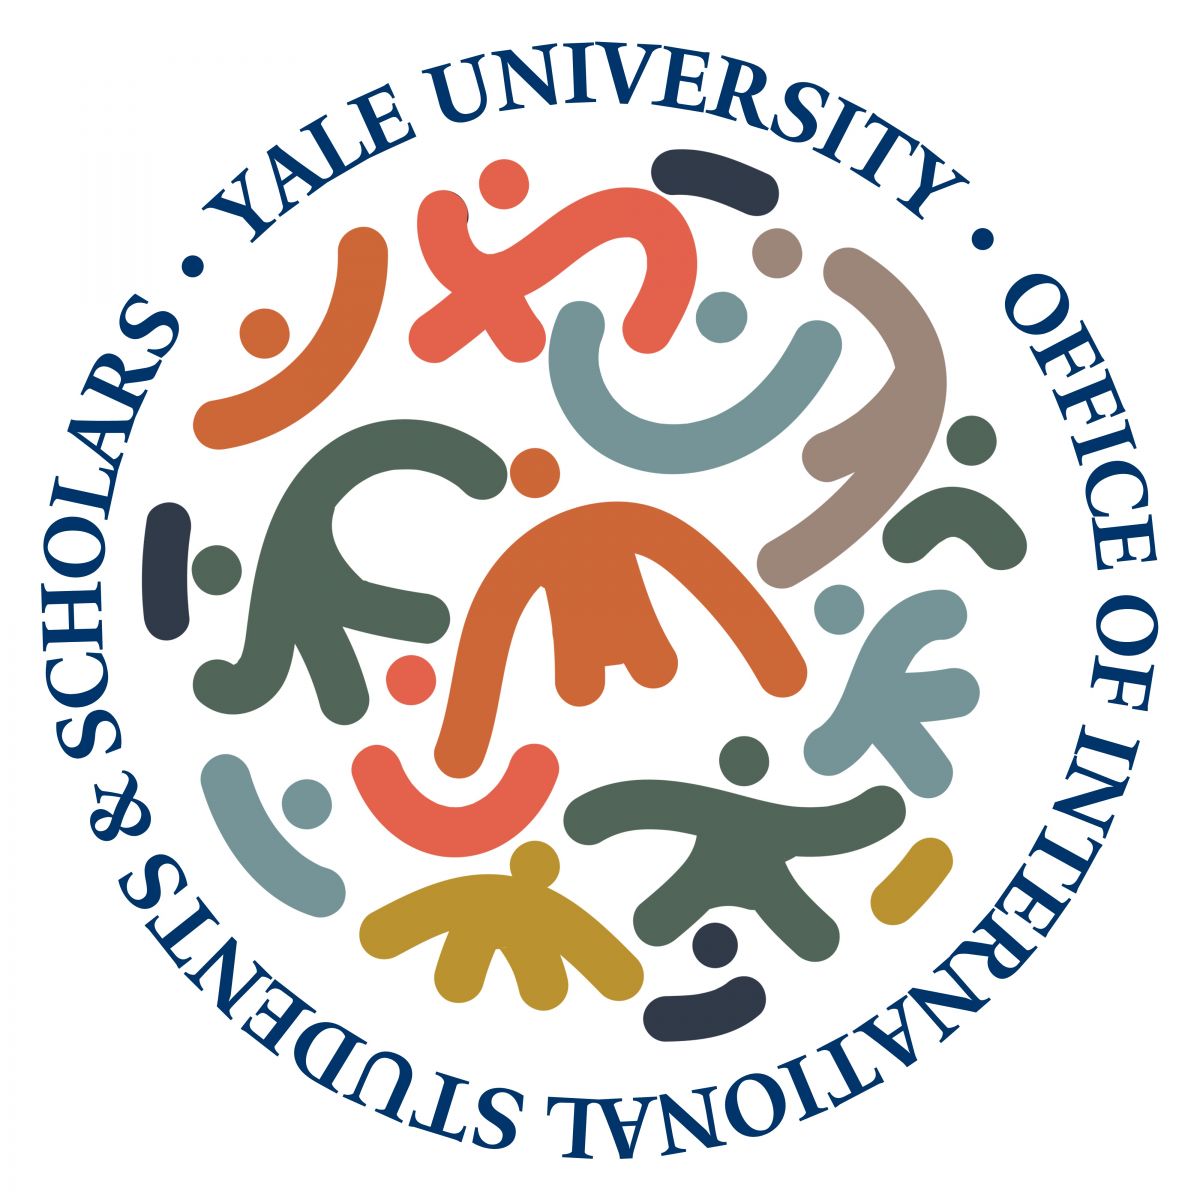 OISS Logo